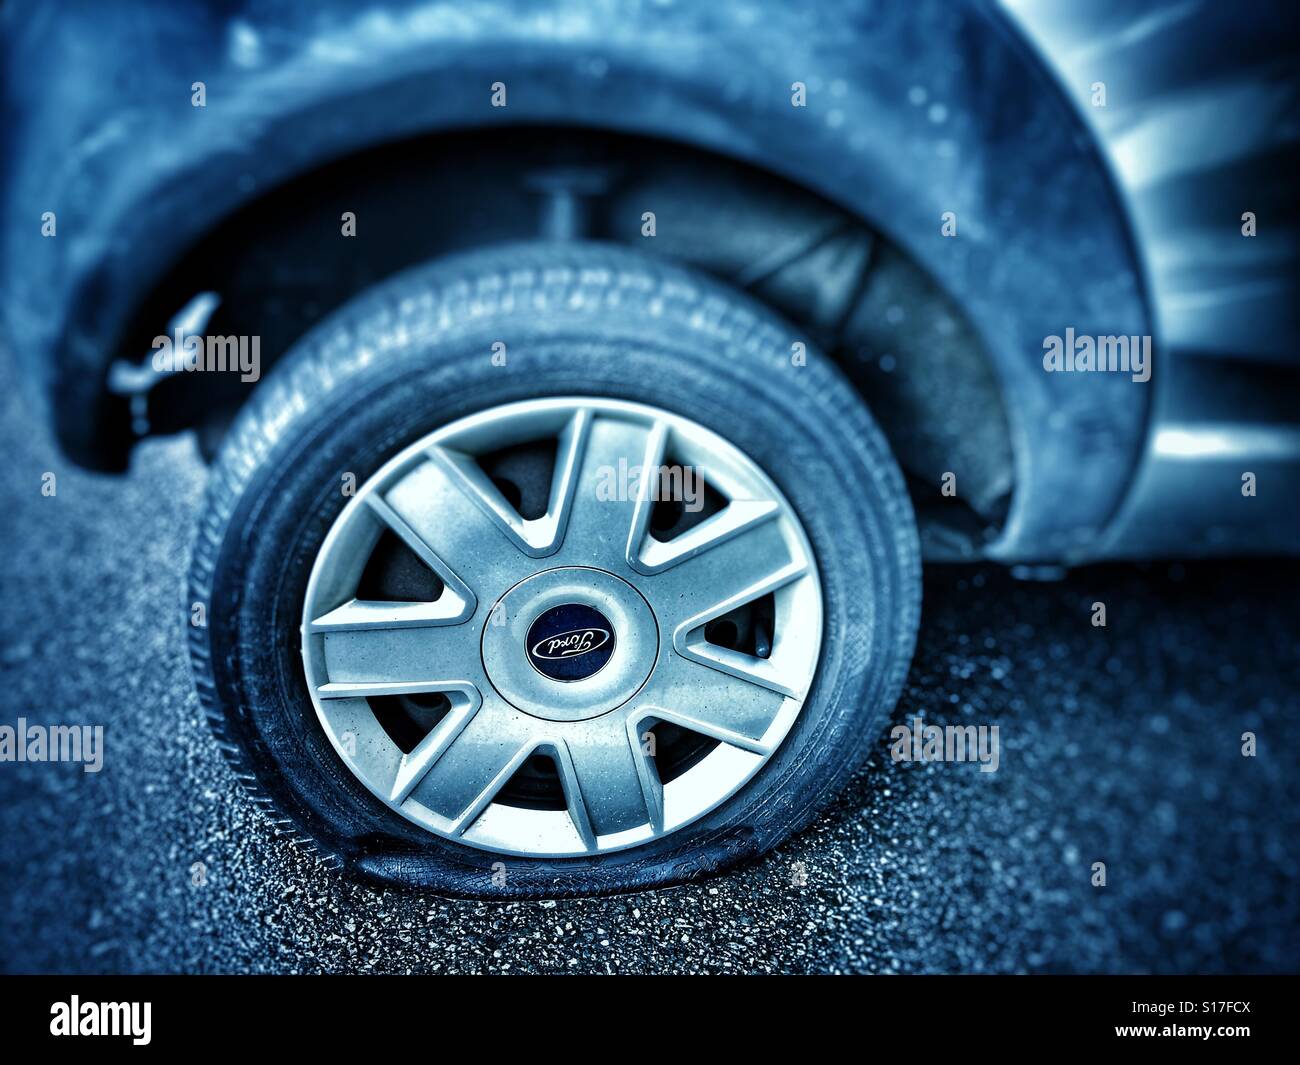 Flat tyre Stock Photo